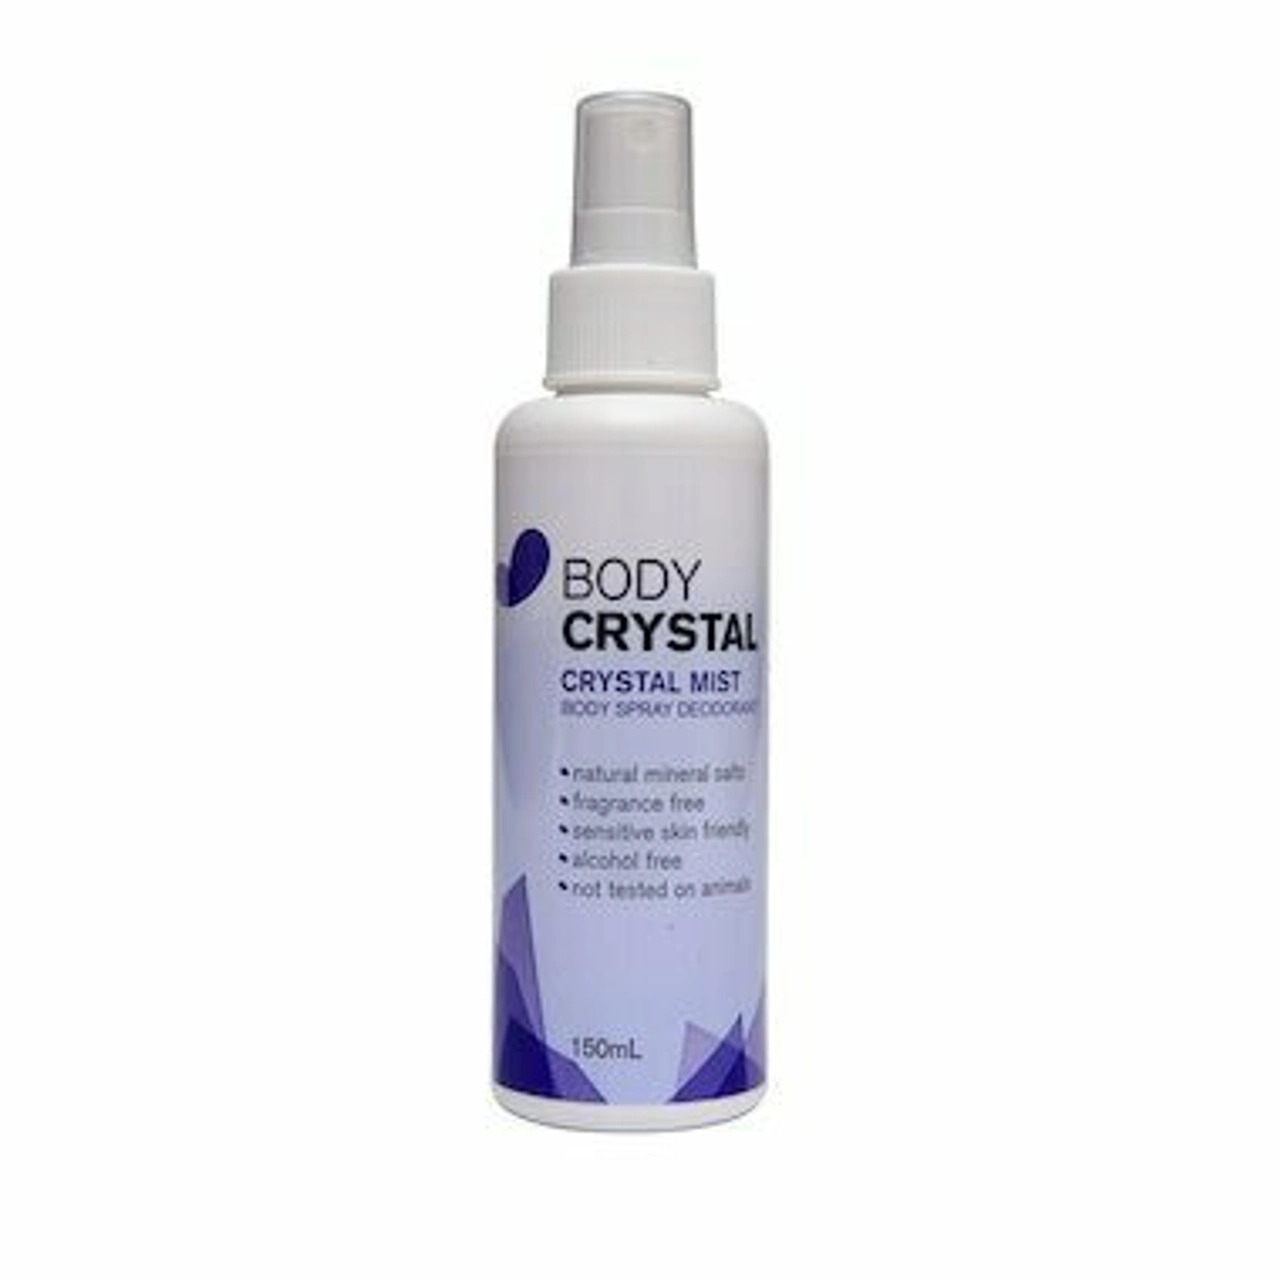 Body Crystal Deodorant Spray 150ml